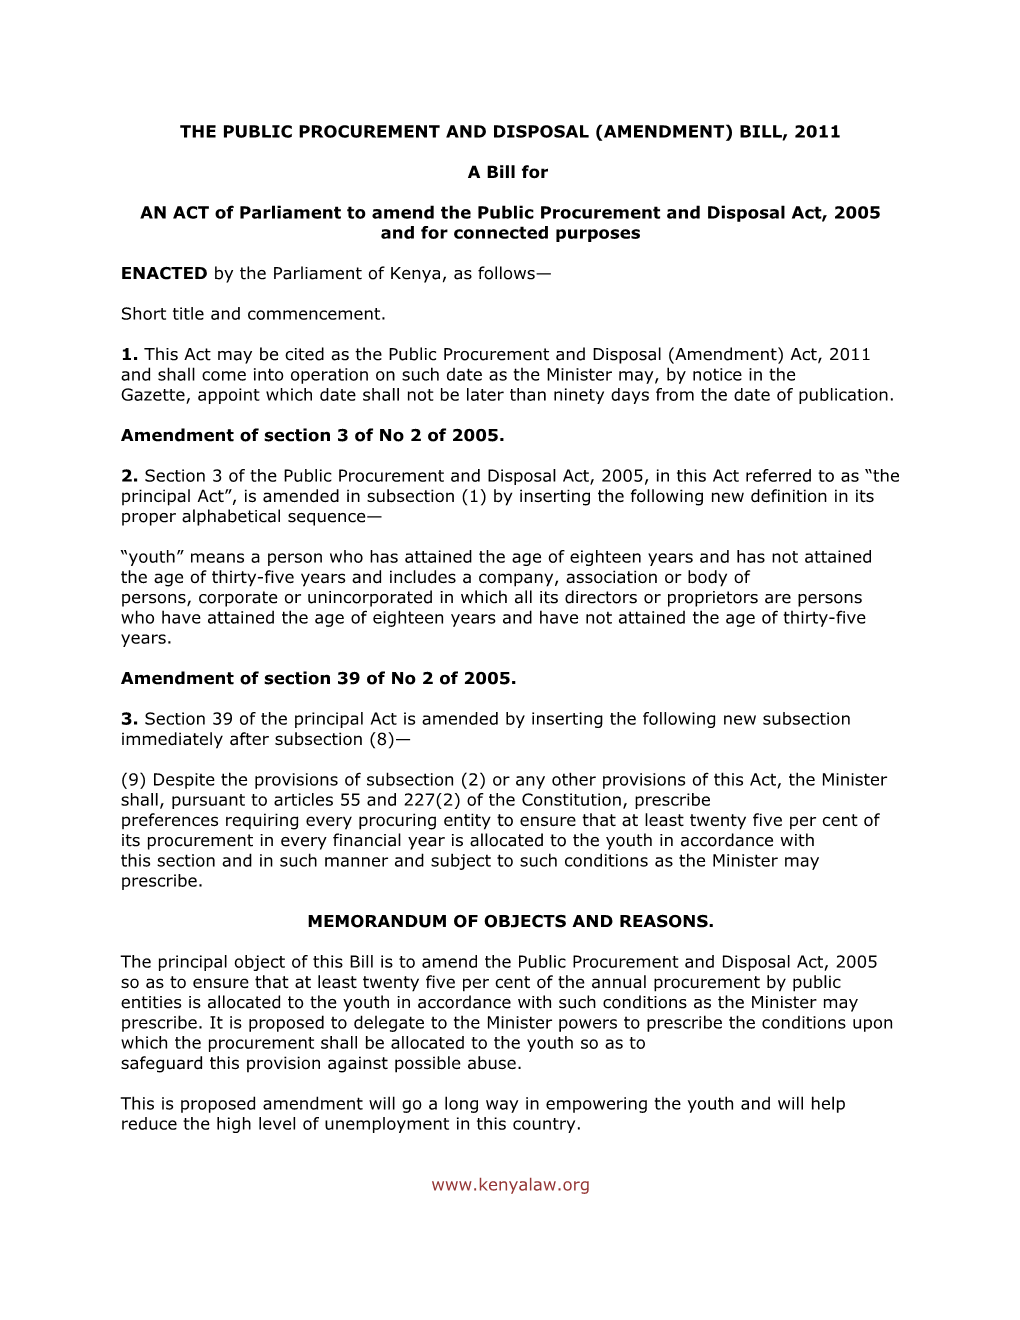 The Public Procurement and Disposal (Amendment) Bill, 2011